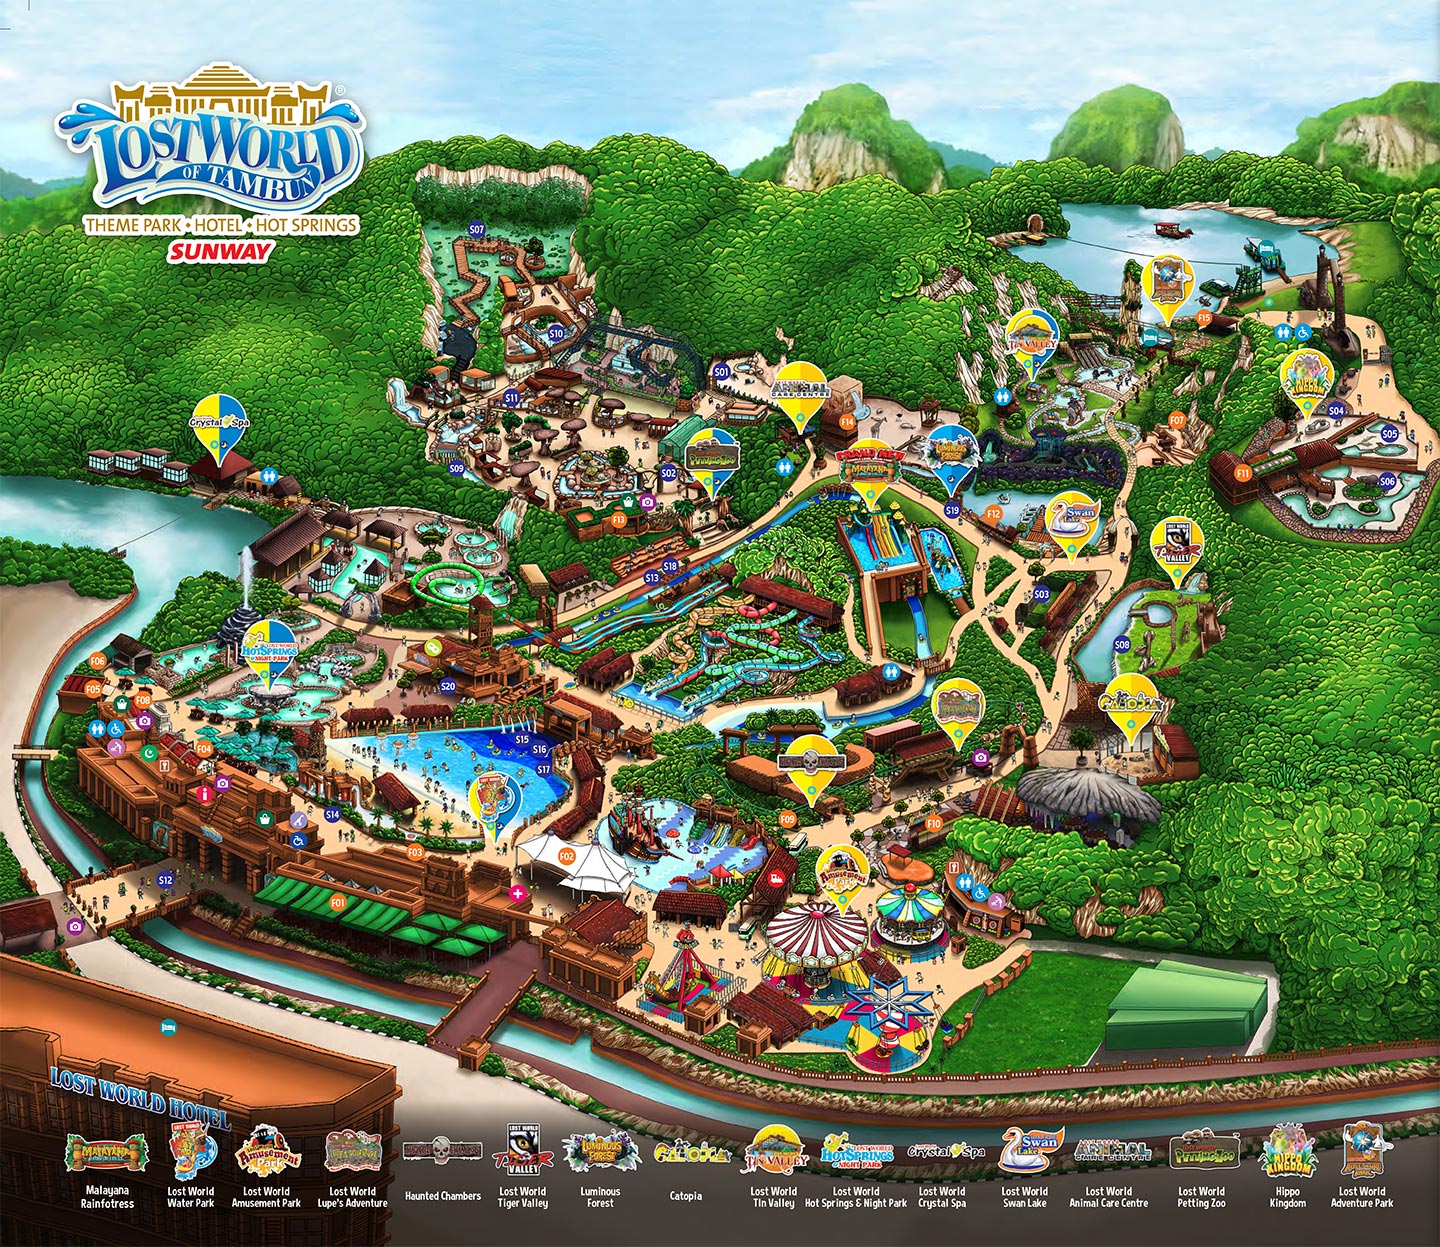 Park Map - Lost World of Tambun Theme Park